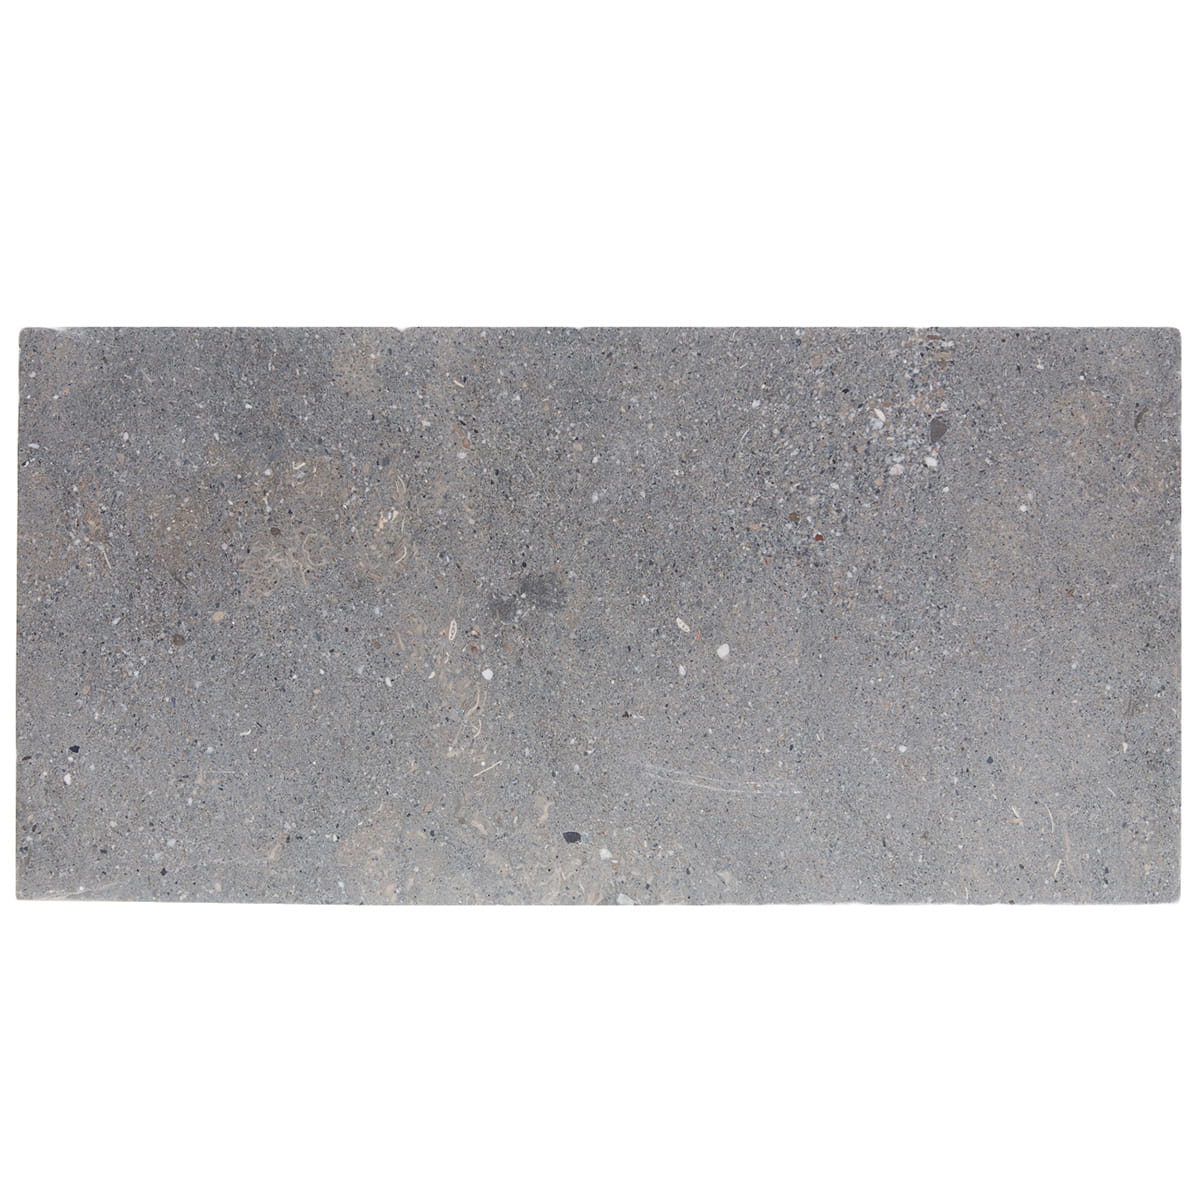 haussmann argent limestone rectangle natural stone field tile 12x24 honed